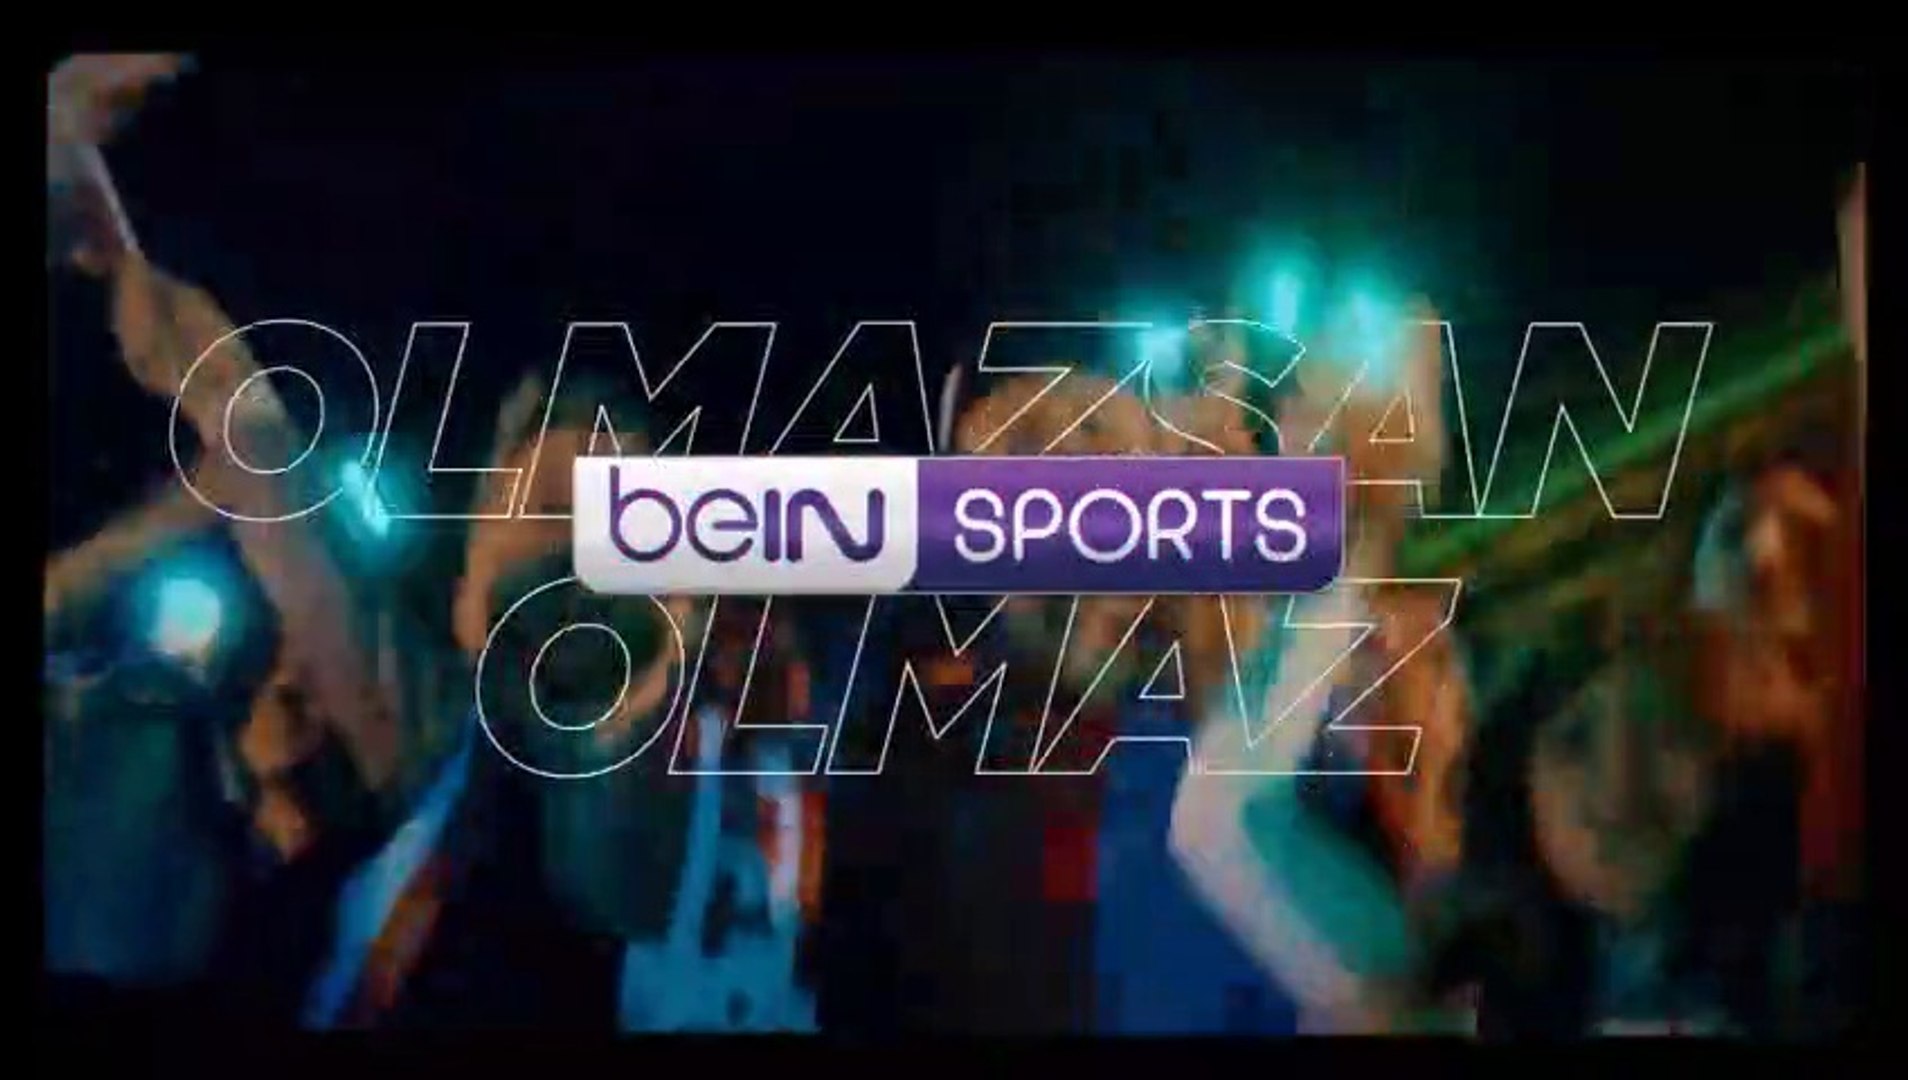 beIN Sports Yeni Sezon Reklam Filmi | Olmazsan Olmaz - Dailymotion Video